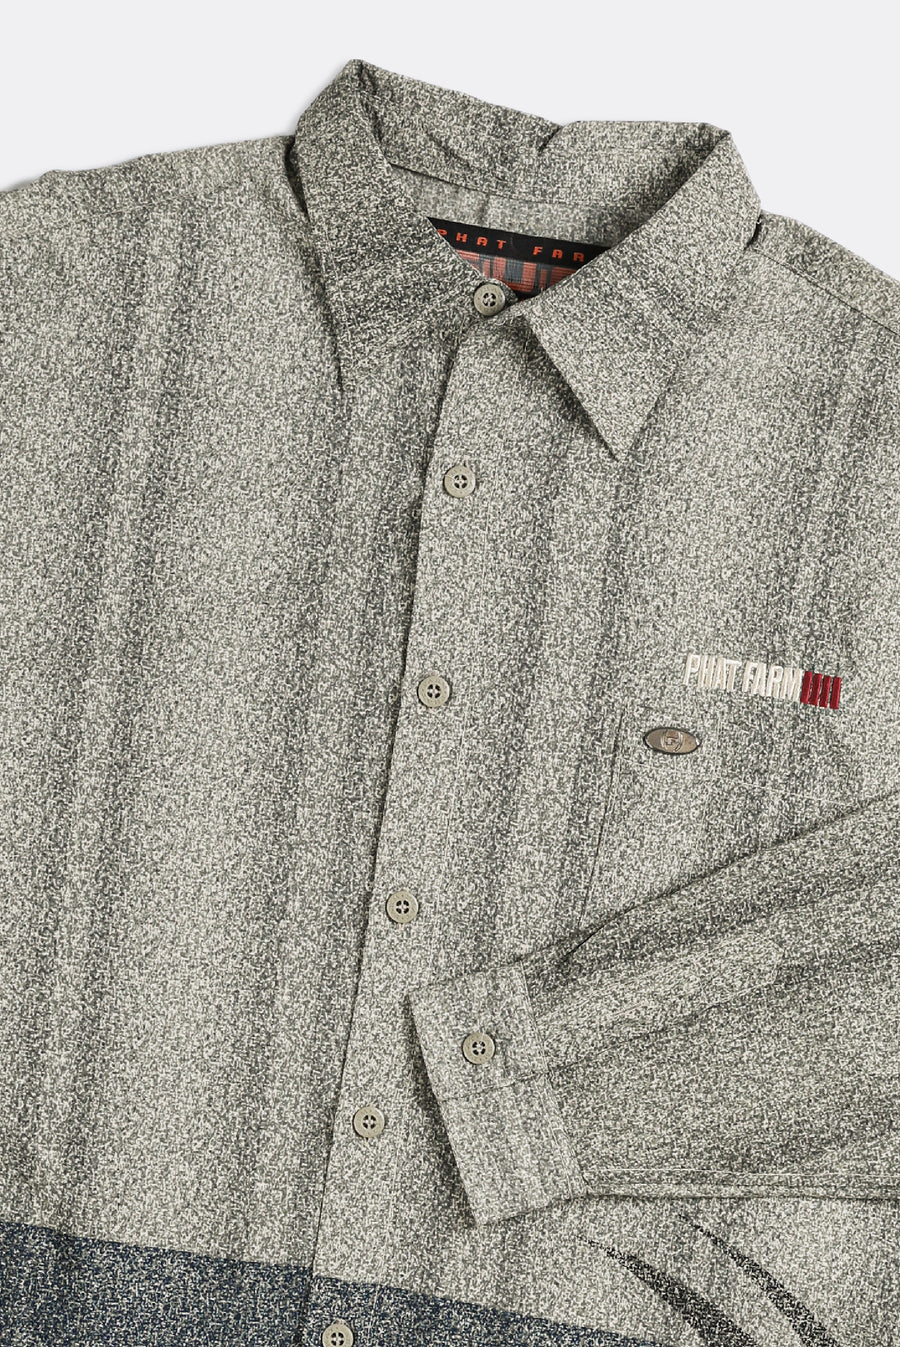 Deadstock Phat Farm Long Sleeve Collared Shirt - XL